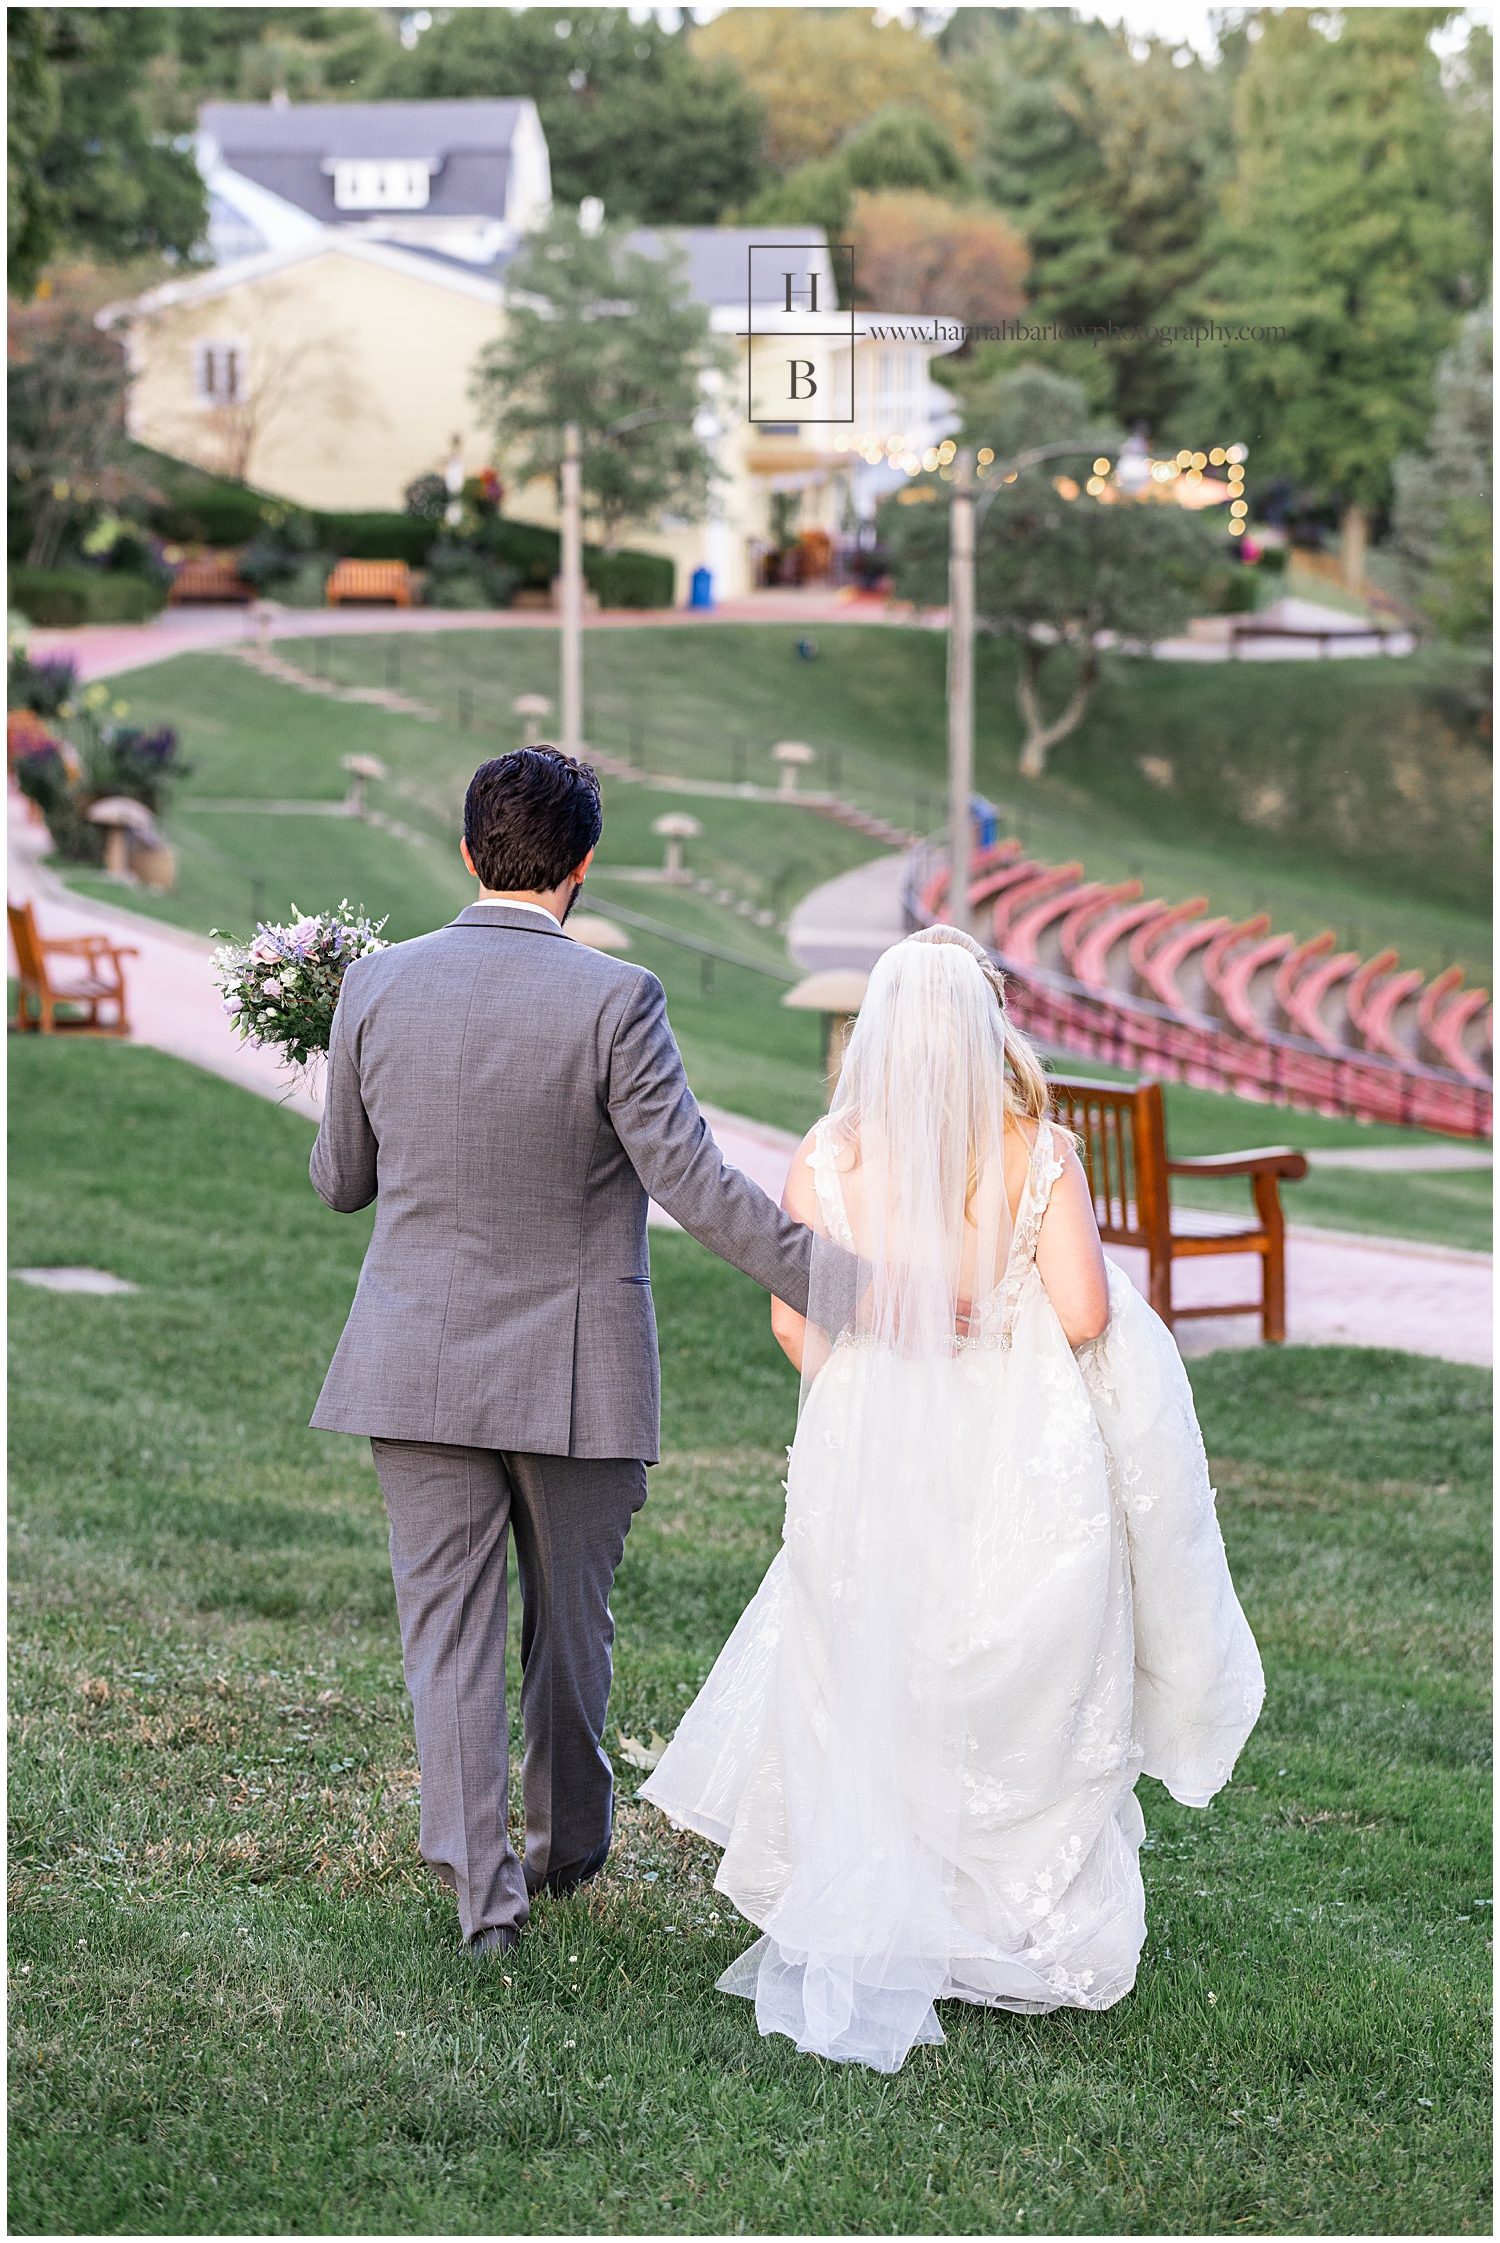 Wedding couple walks away from photographer after photos.